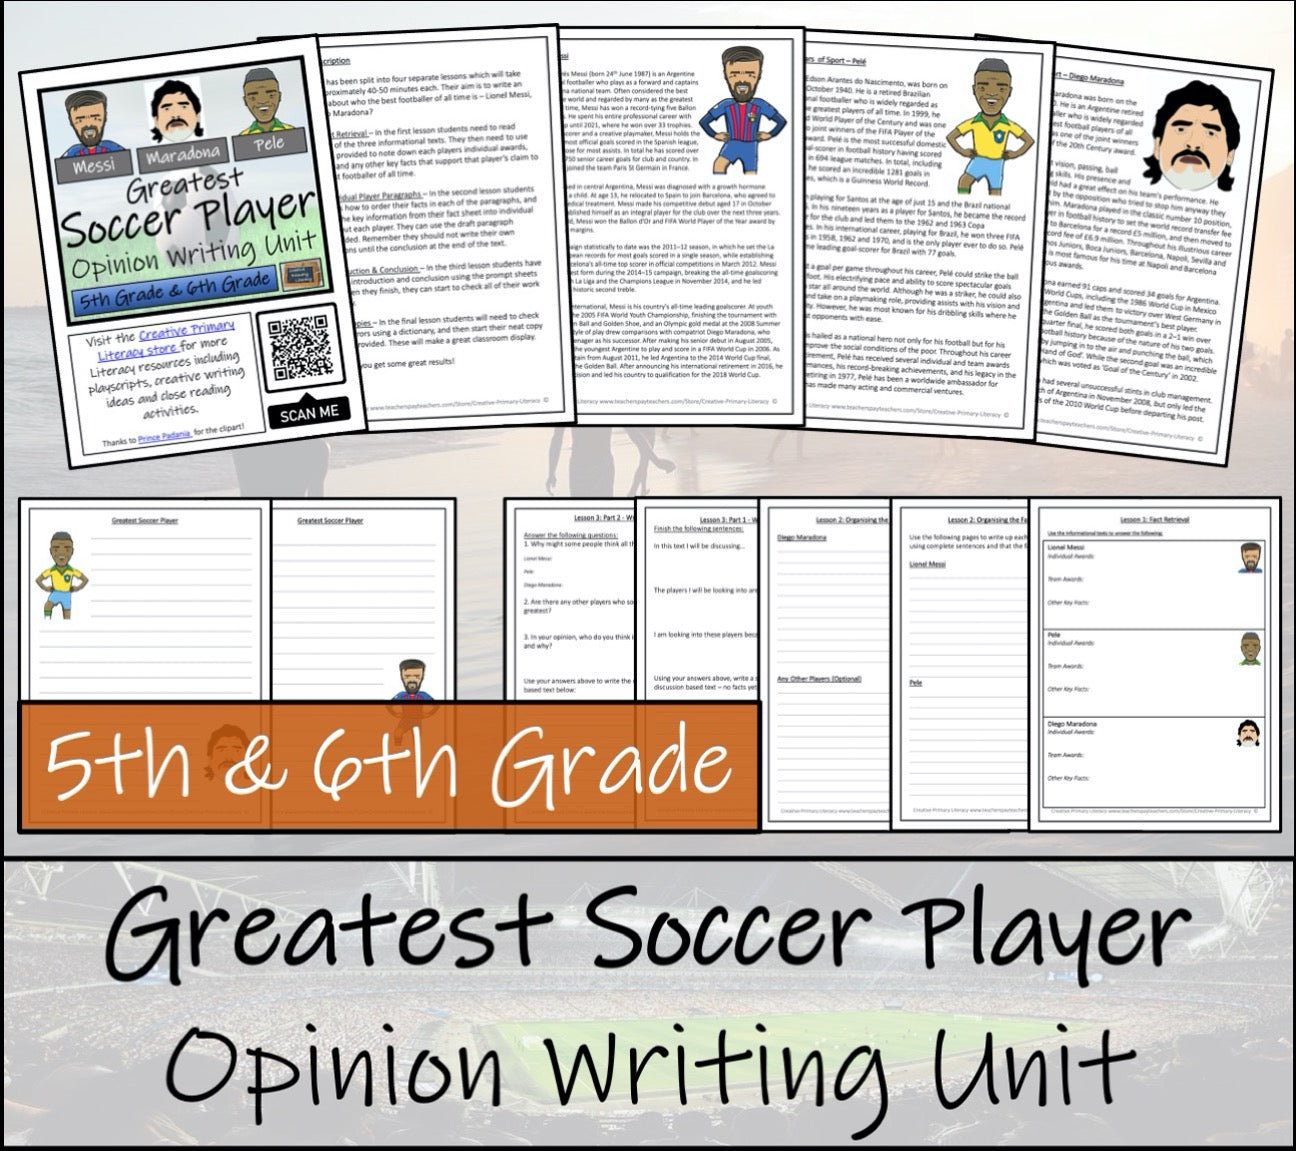 Greatest Soccer Stars Mega Bundle of Activities | 5th Grade & 6th Grade